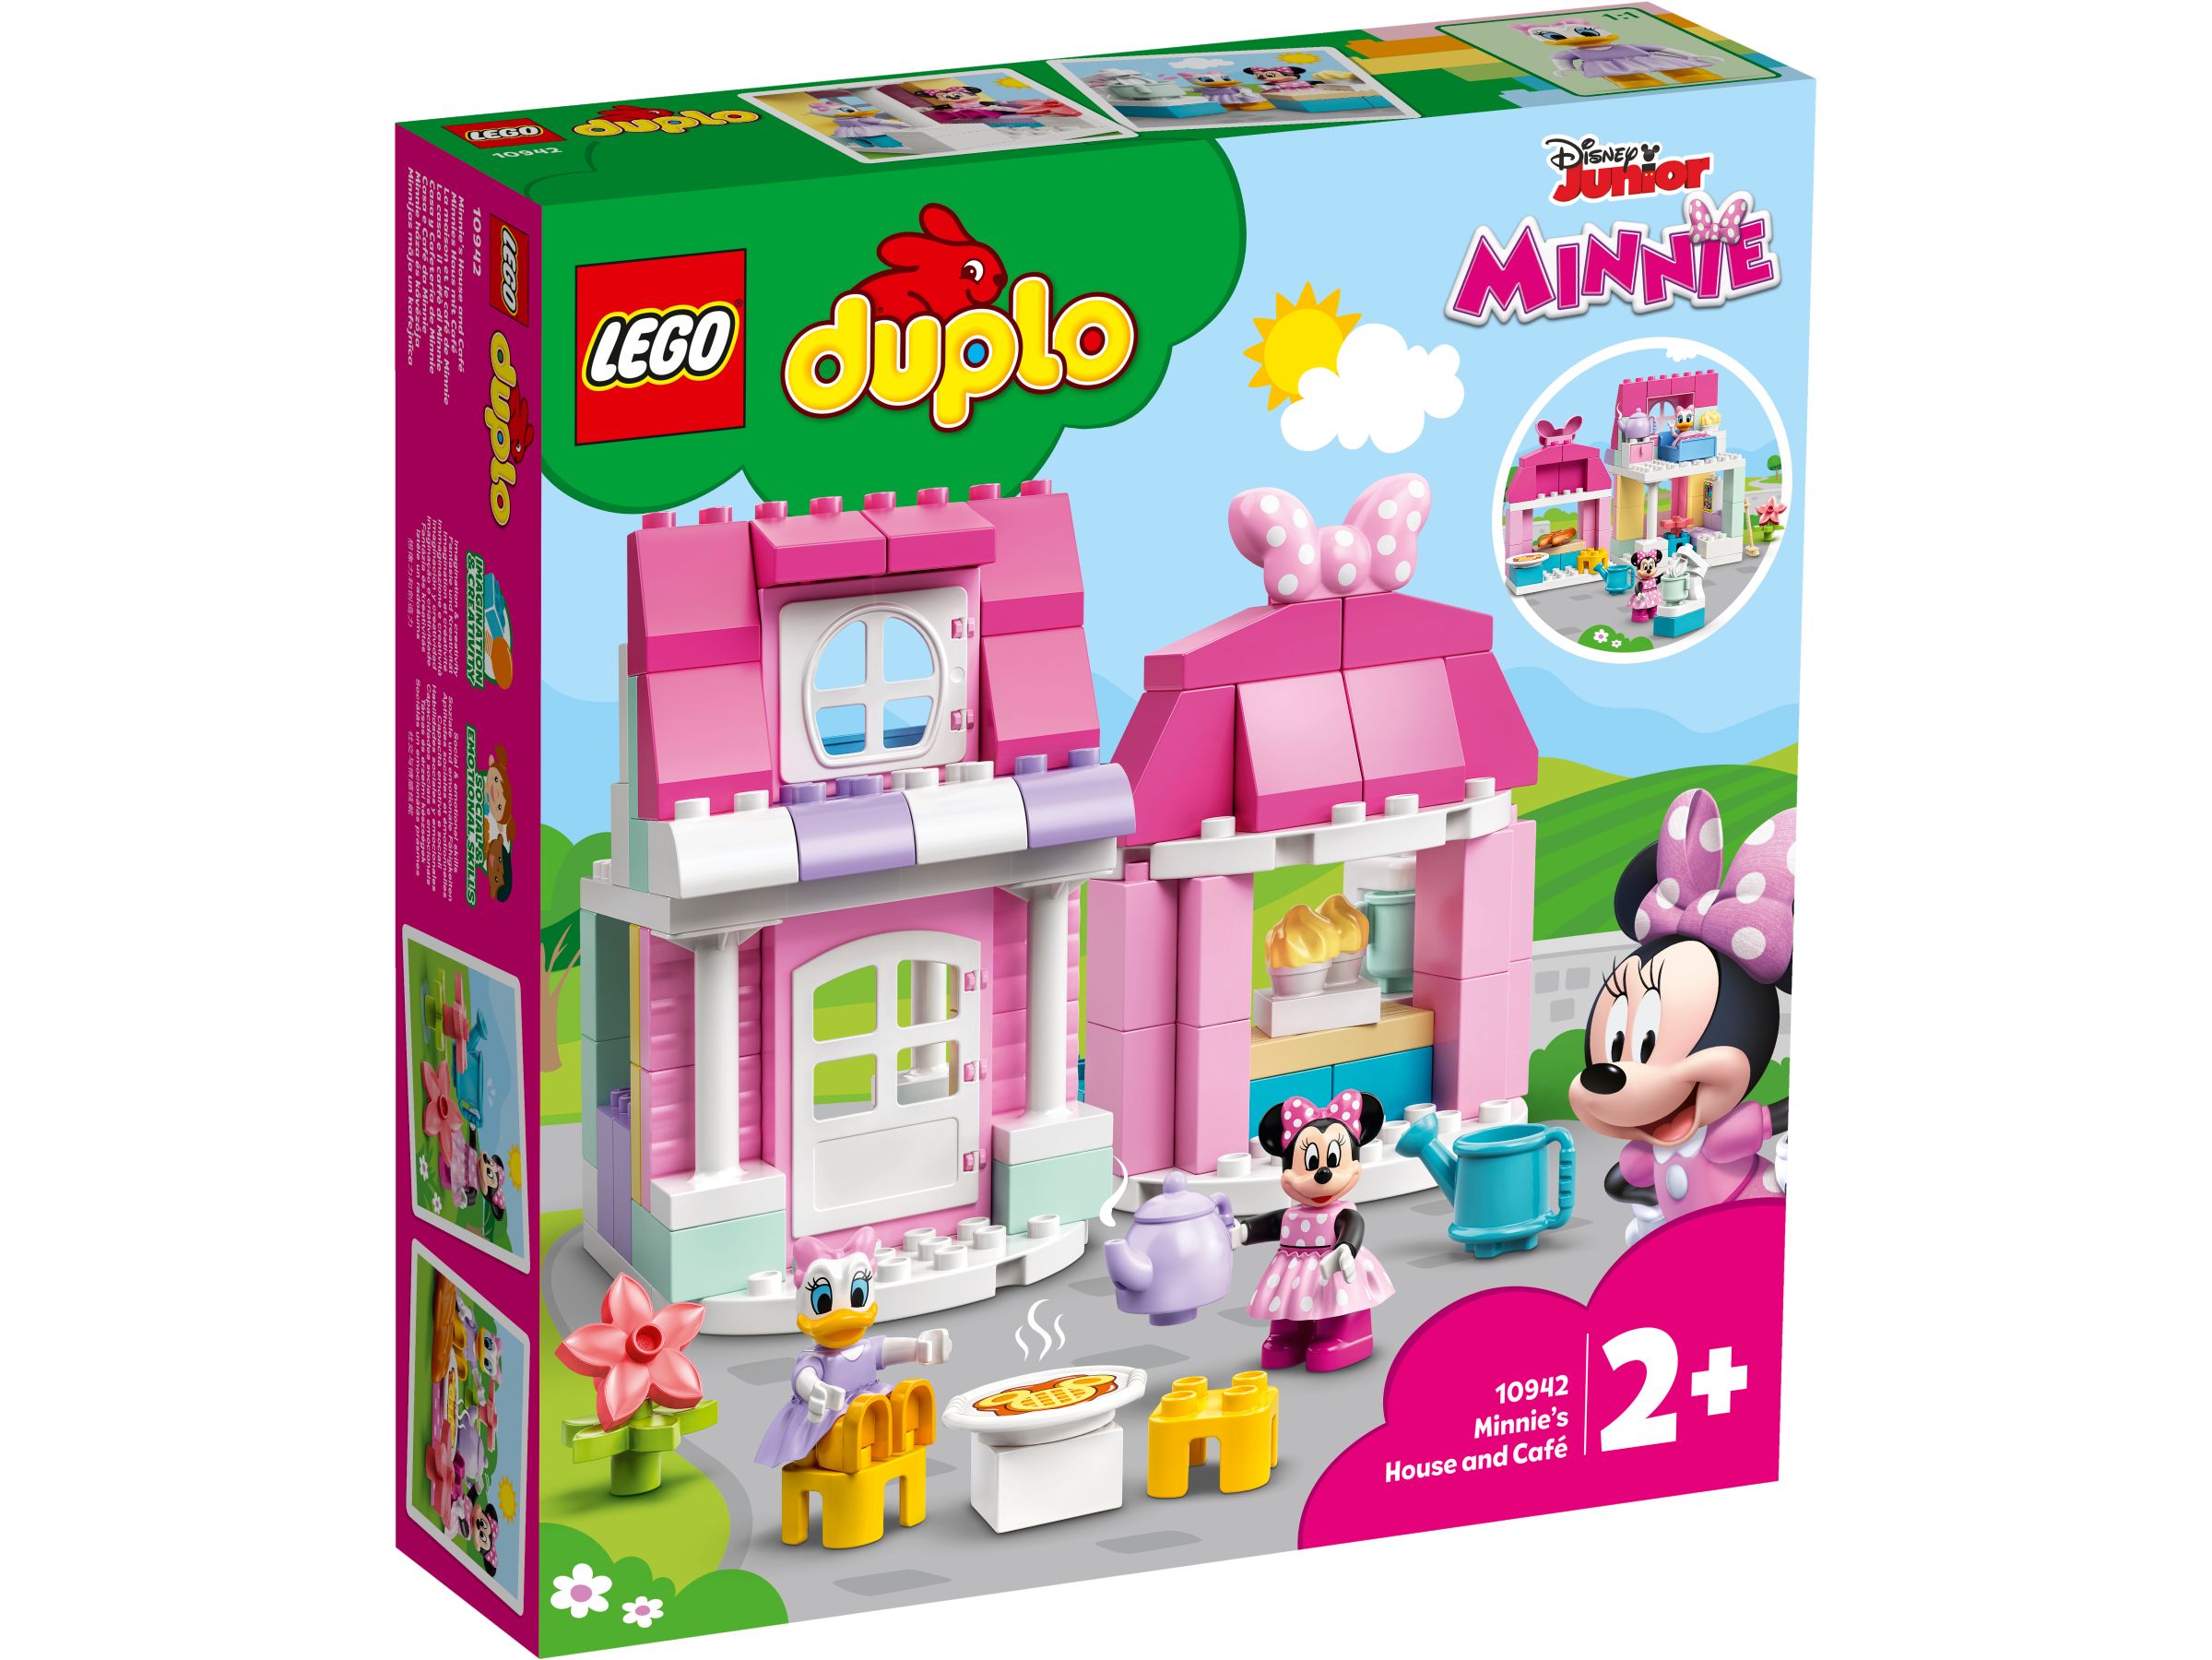 LEGO Duplo 10942 Minnies Haus mit Café LEGO_10942_box1_v29.jpg